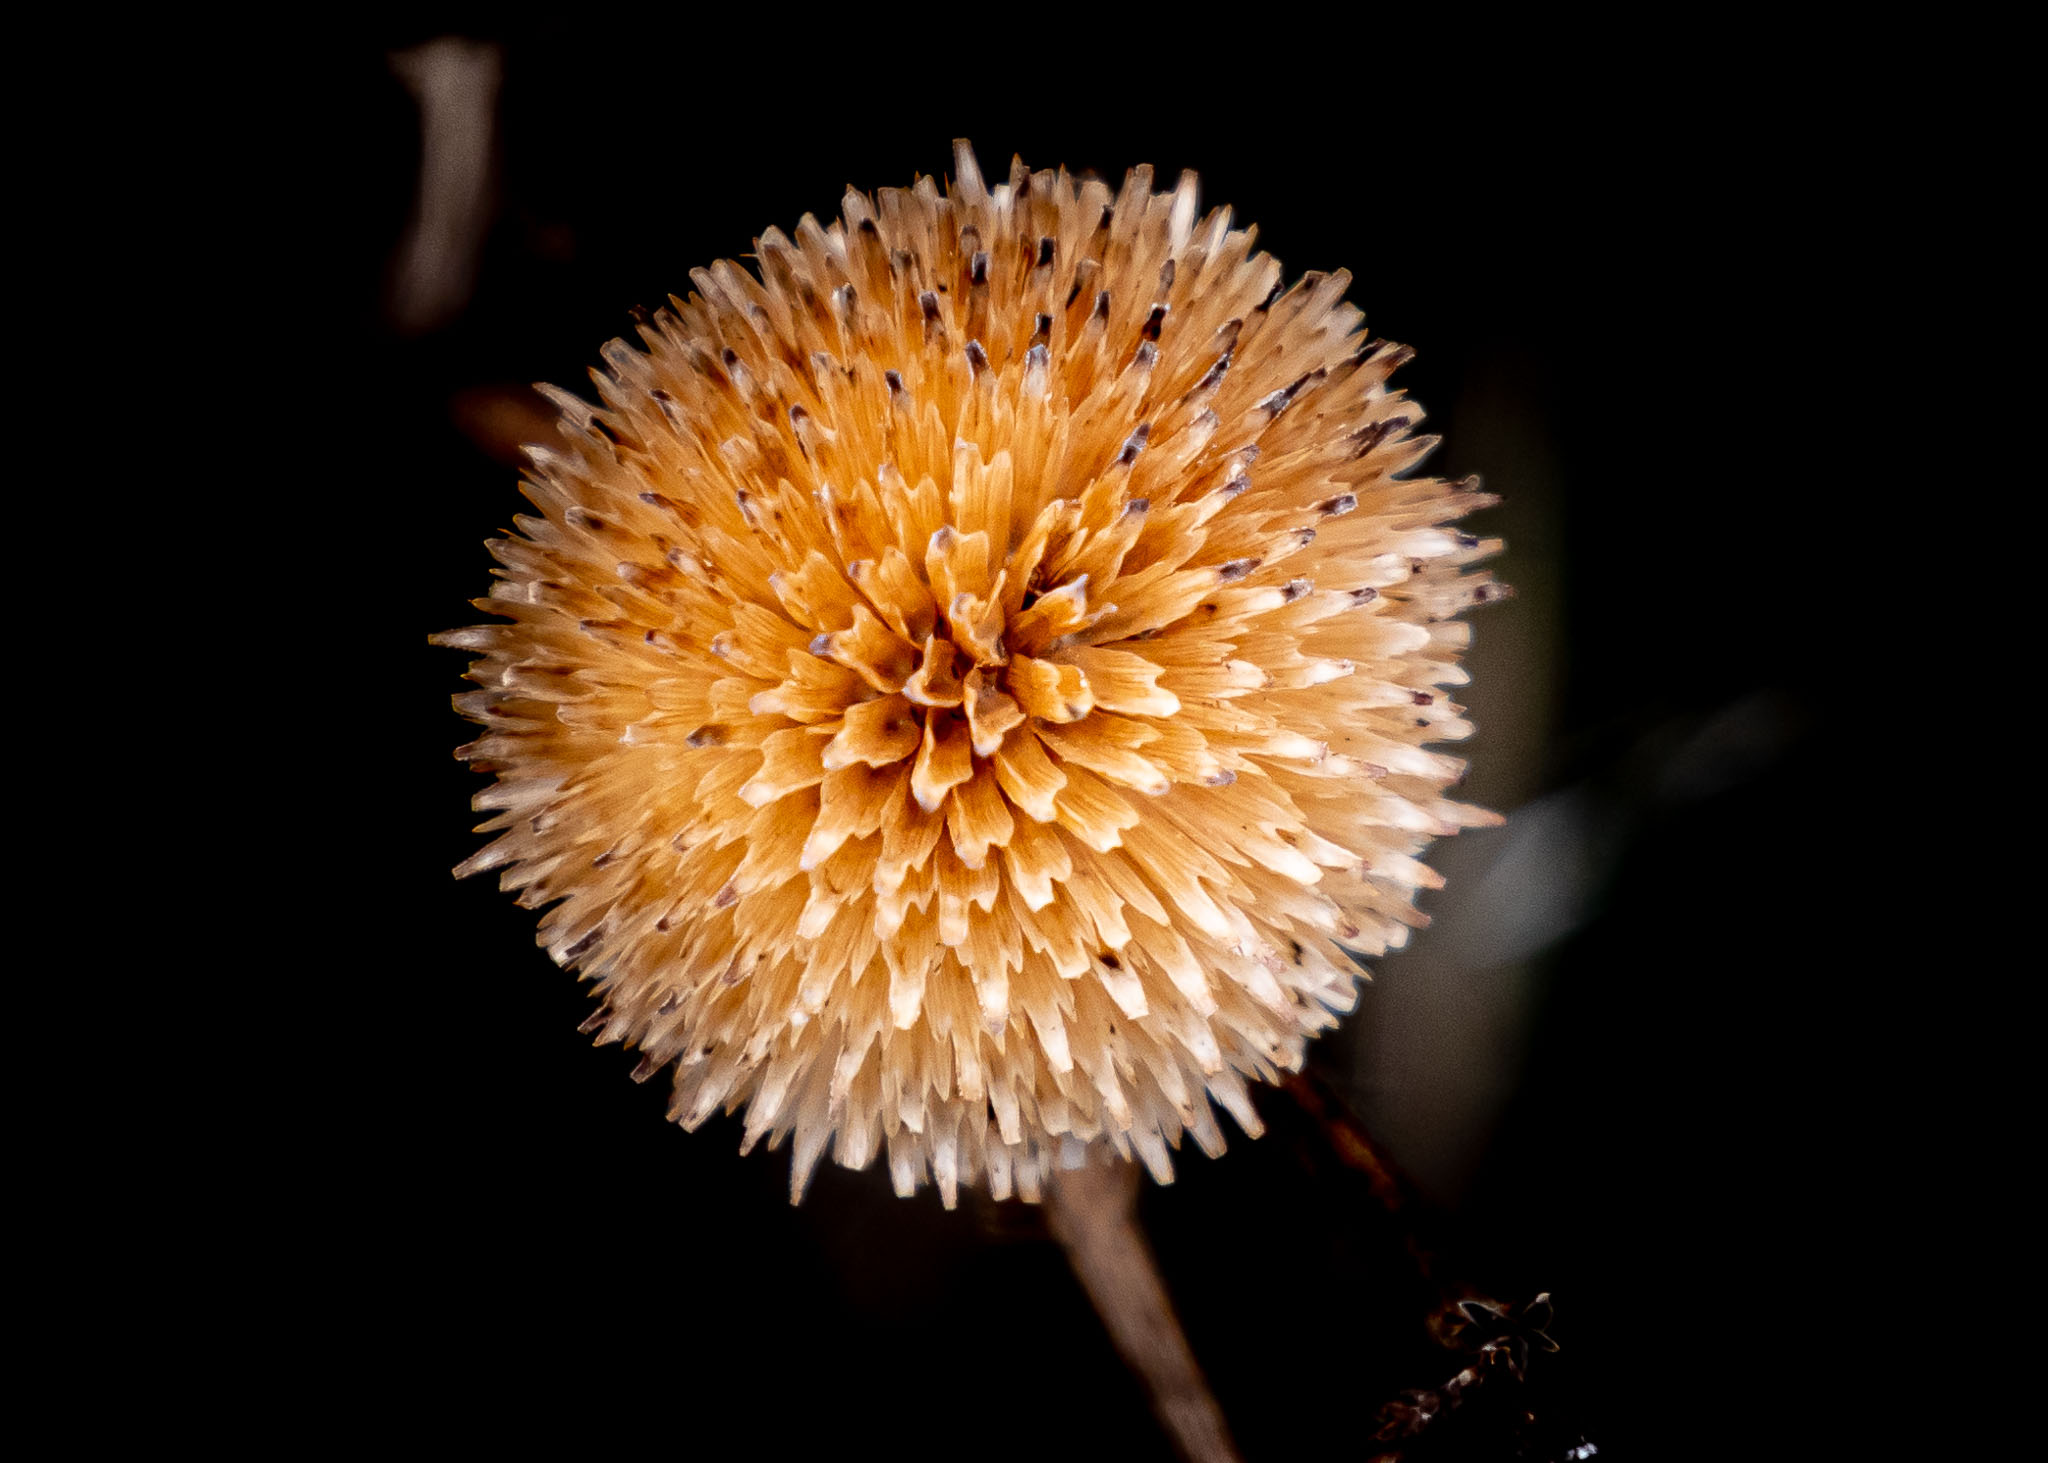 Seedhead, Common Sunflower, Bosque del Apache National Wildlife Refuge, San Antonio NM, November 16, 2019